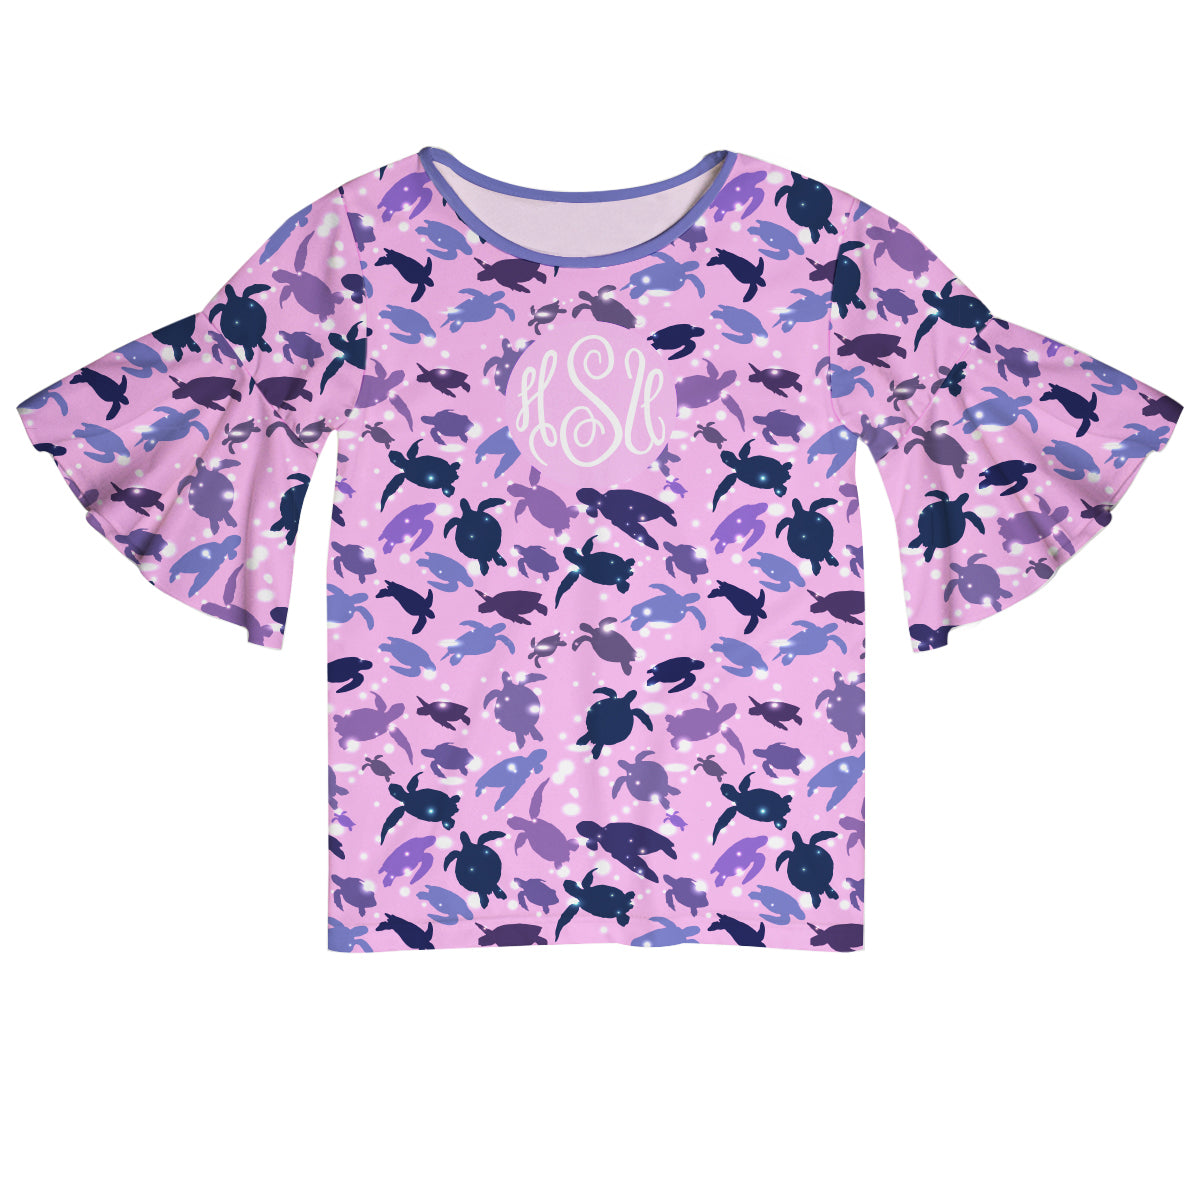 Turtles Print Monogram Pink Short Sleeve Ruffle Top - Wimziy&Co.